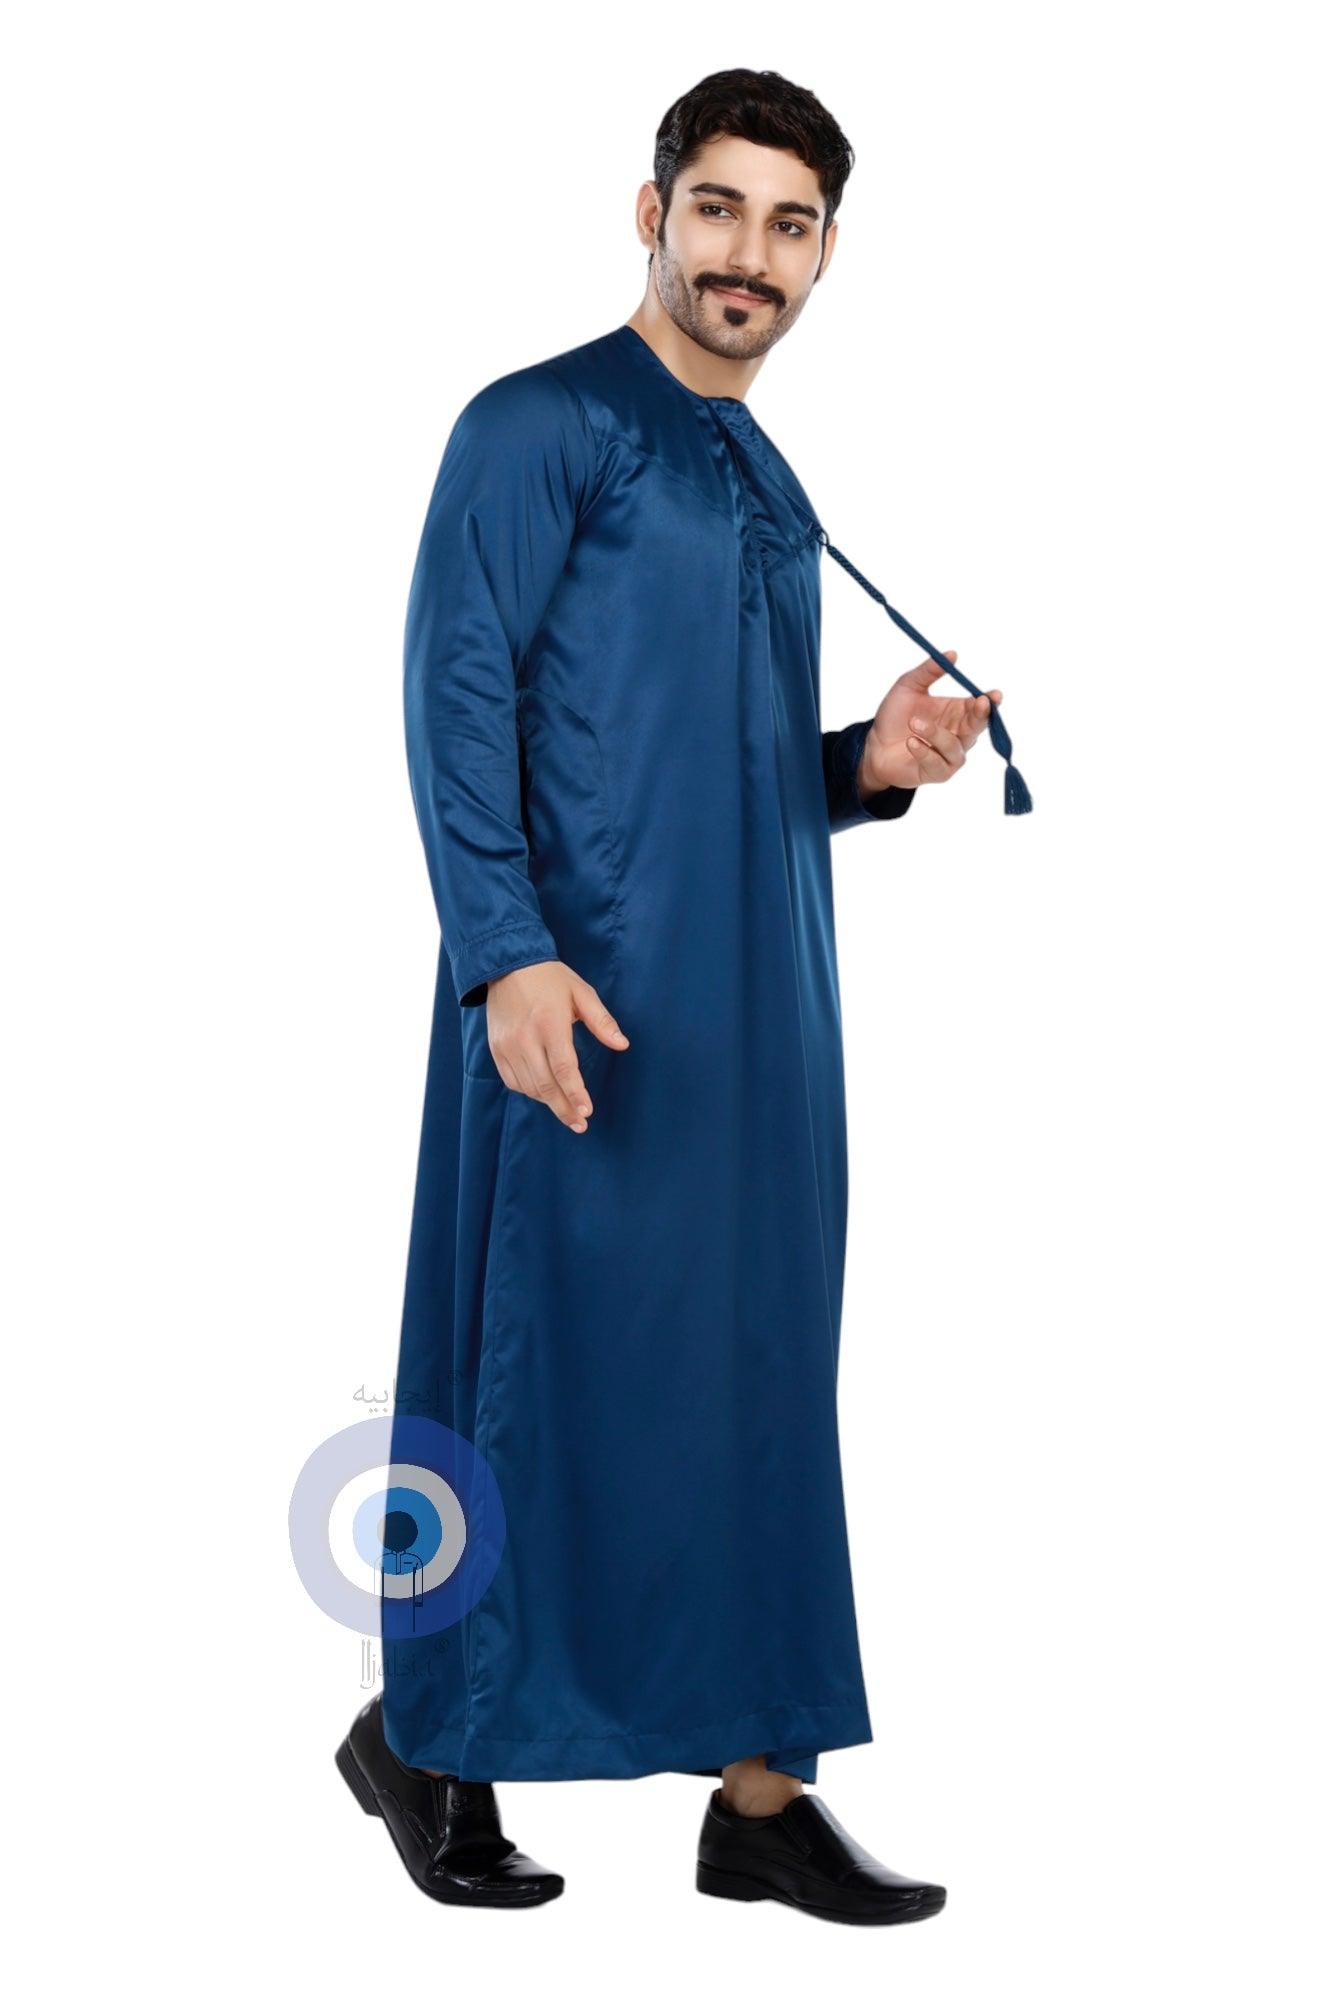 Indian Shiny Fabric Emirati Mens Omani Thobe - Full Sleeves - Navy Blue - IIJABIA